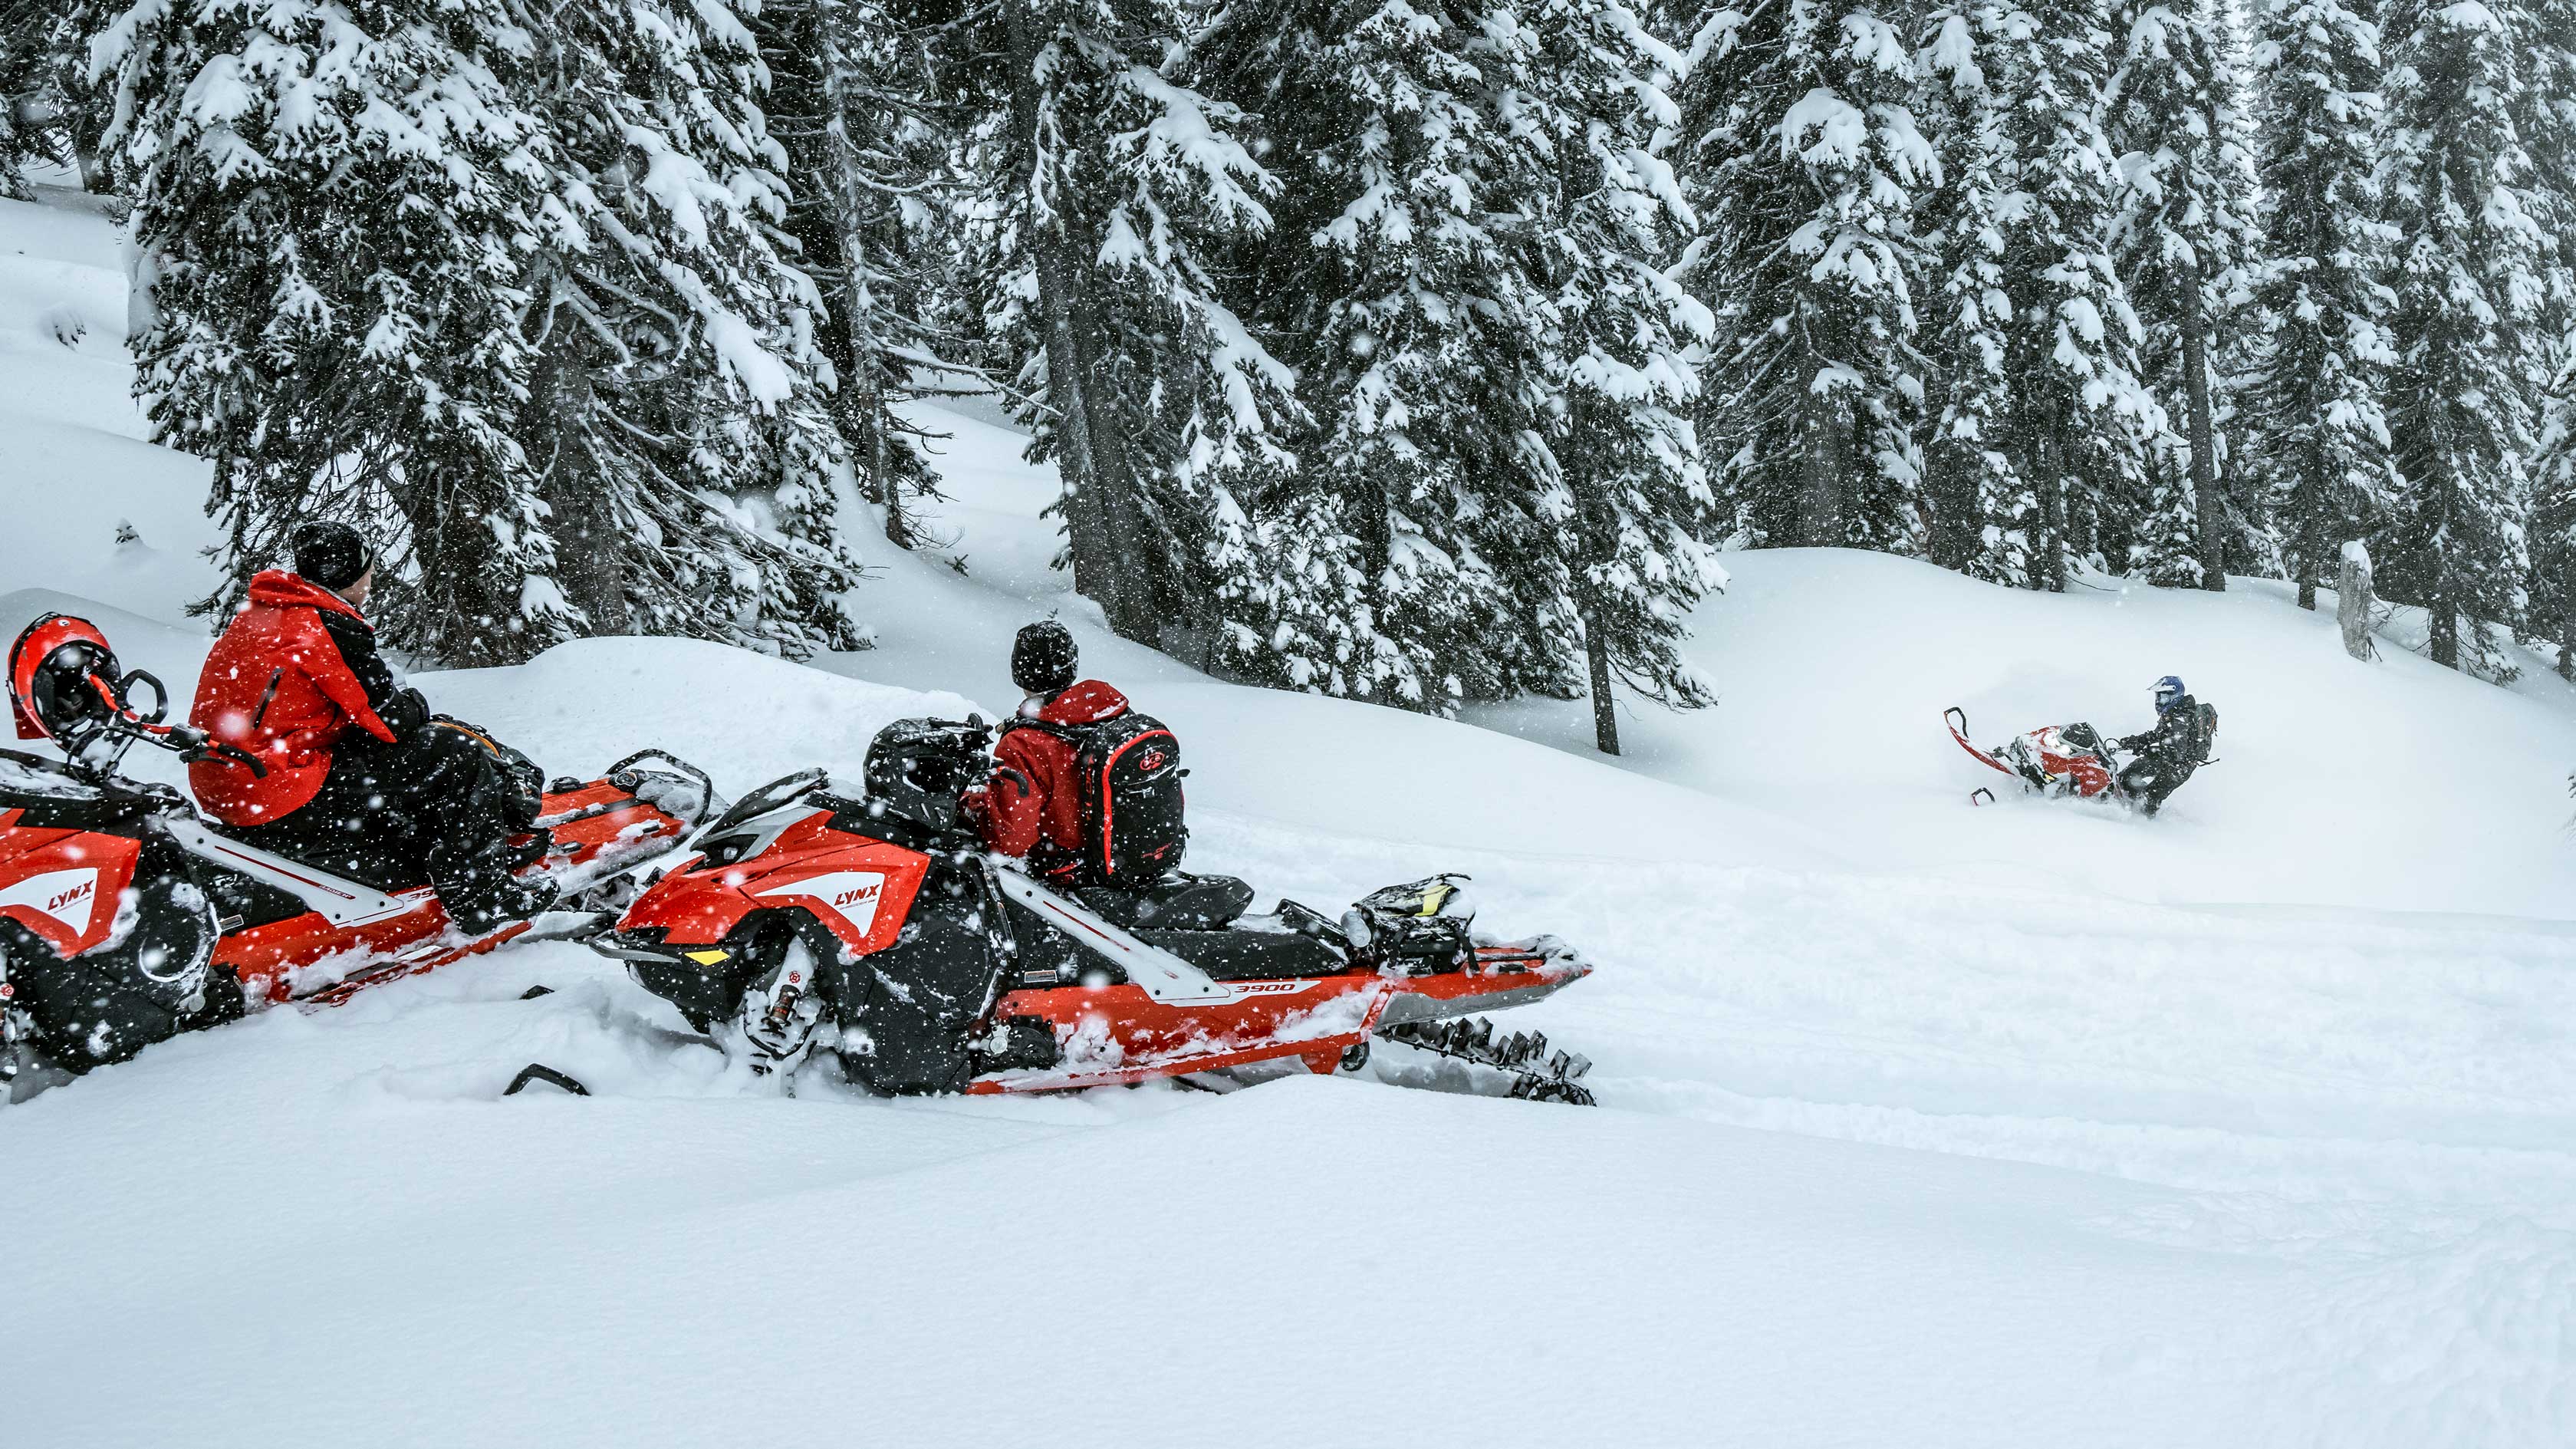 Riders on their Lynx snowmobile looking at their friend riding through deep snow